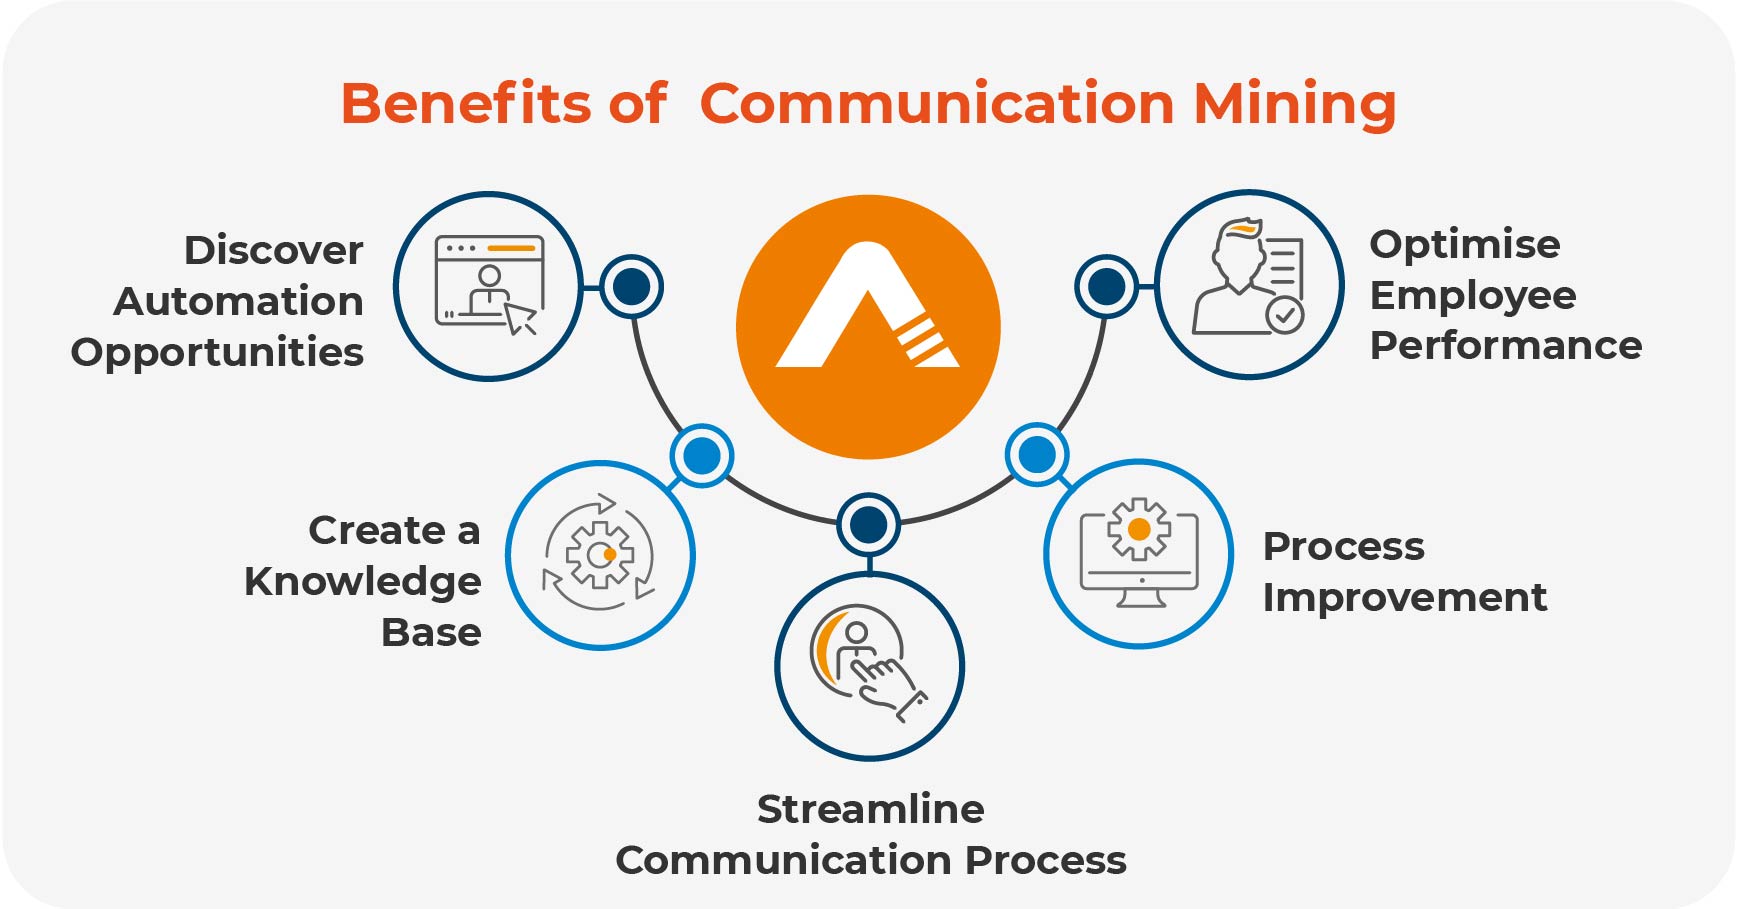 Benefits of Communication Mining